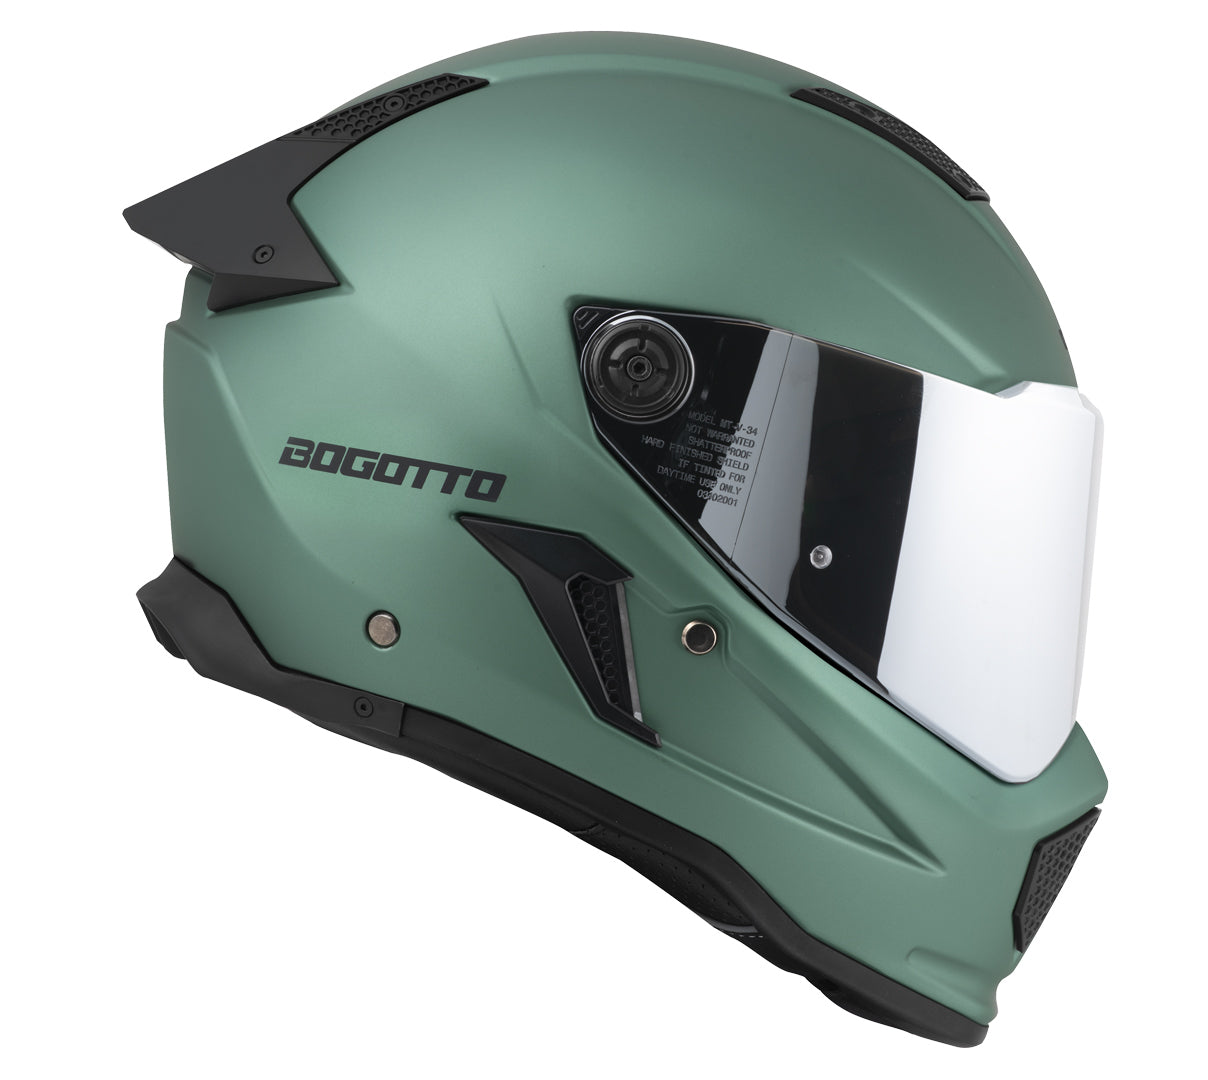 Bogotto Rapto Helmet#color_green-matt